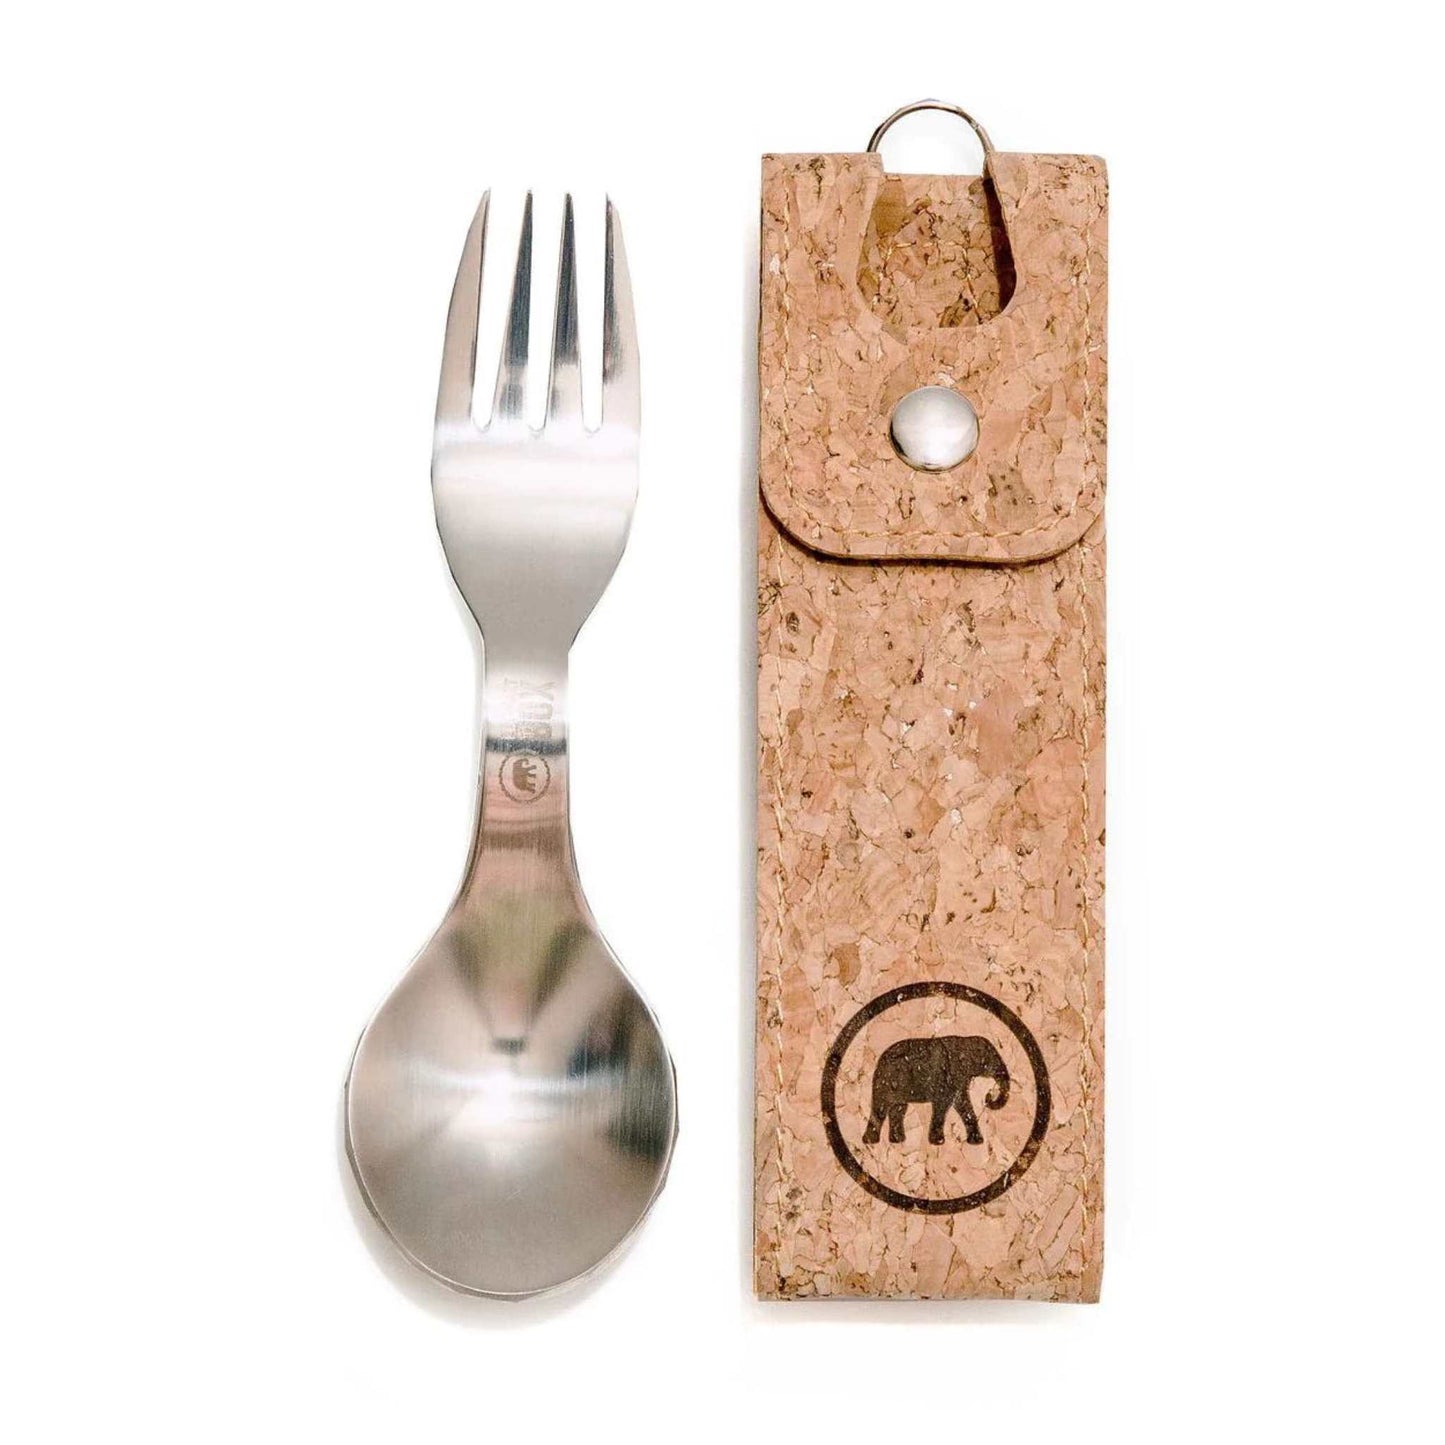 Elephant Box Cutlery Stainless Steel Spork in Cork Sleeve - Elephant Box